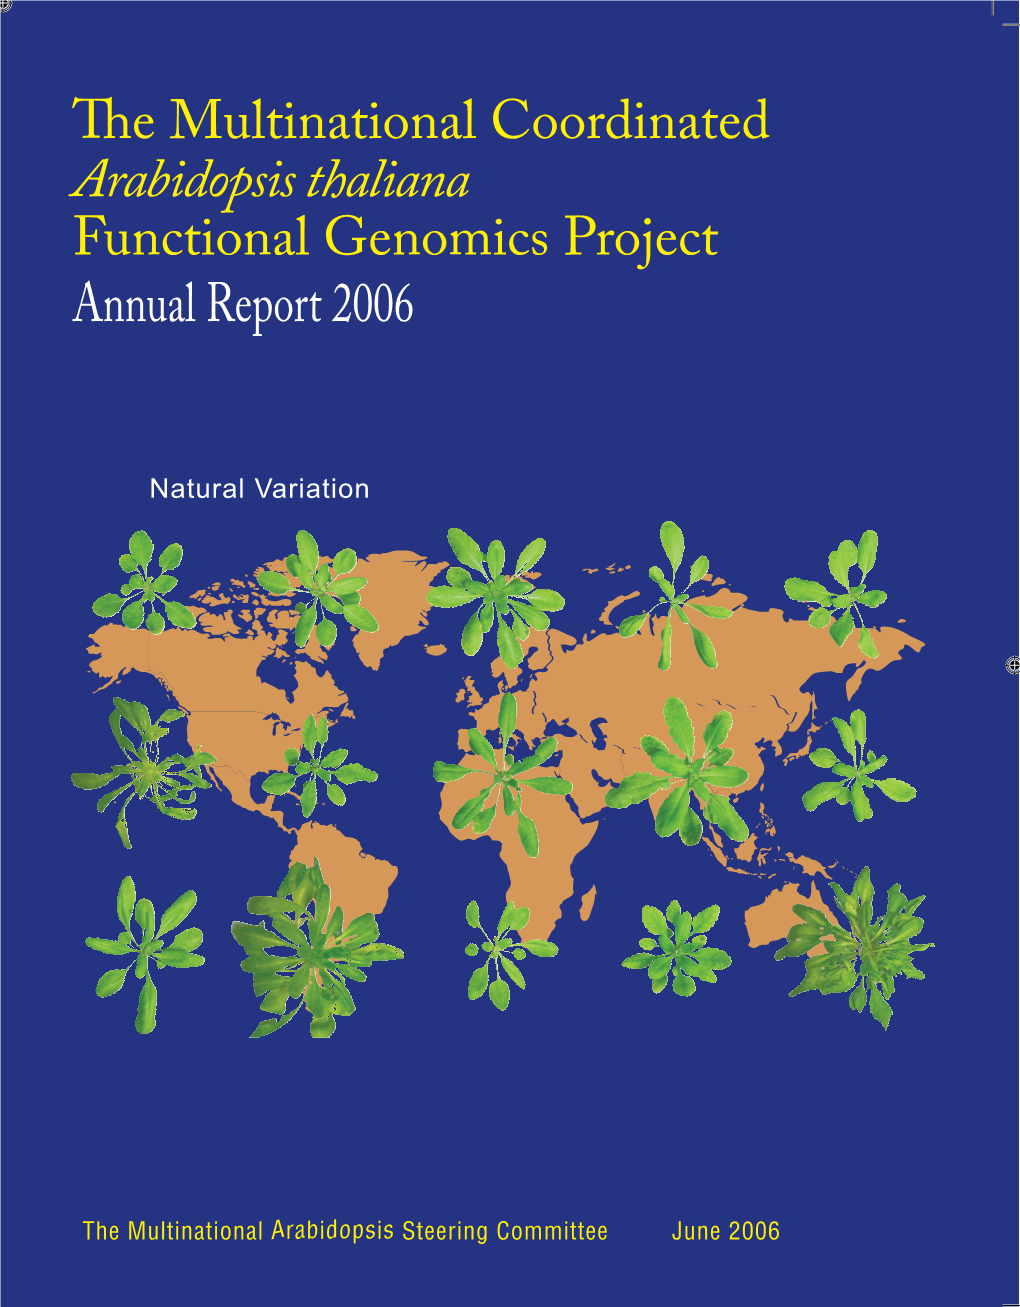 The Multinational Arabidopsis Thaliana Functional Genomics Project